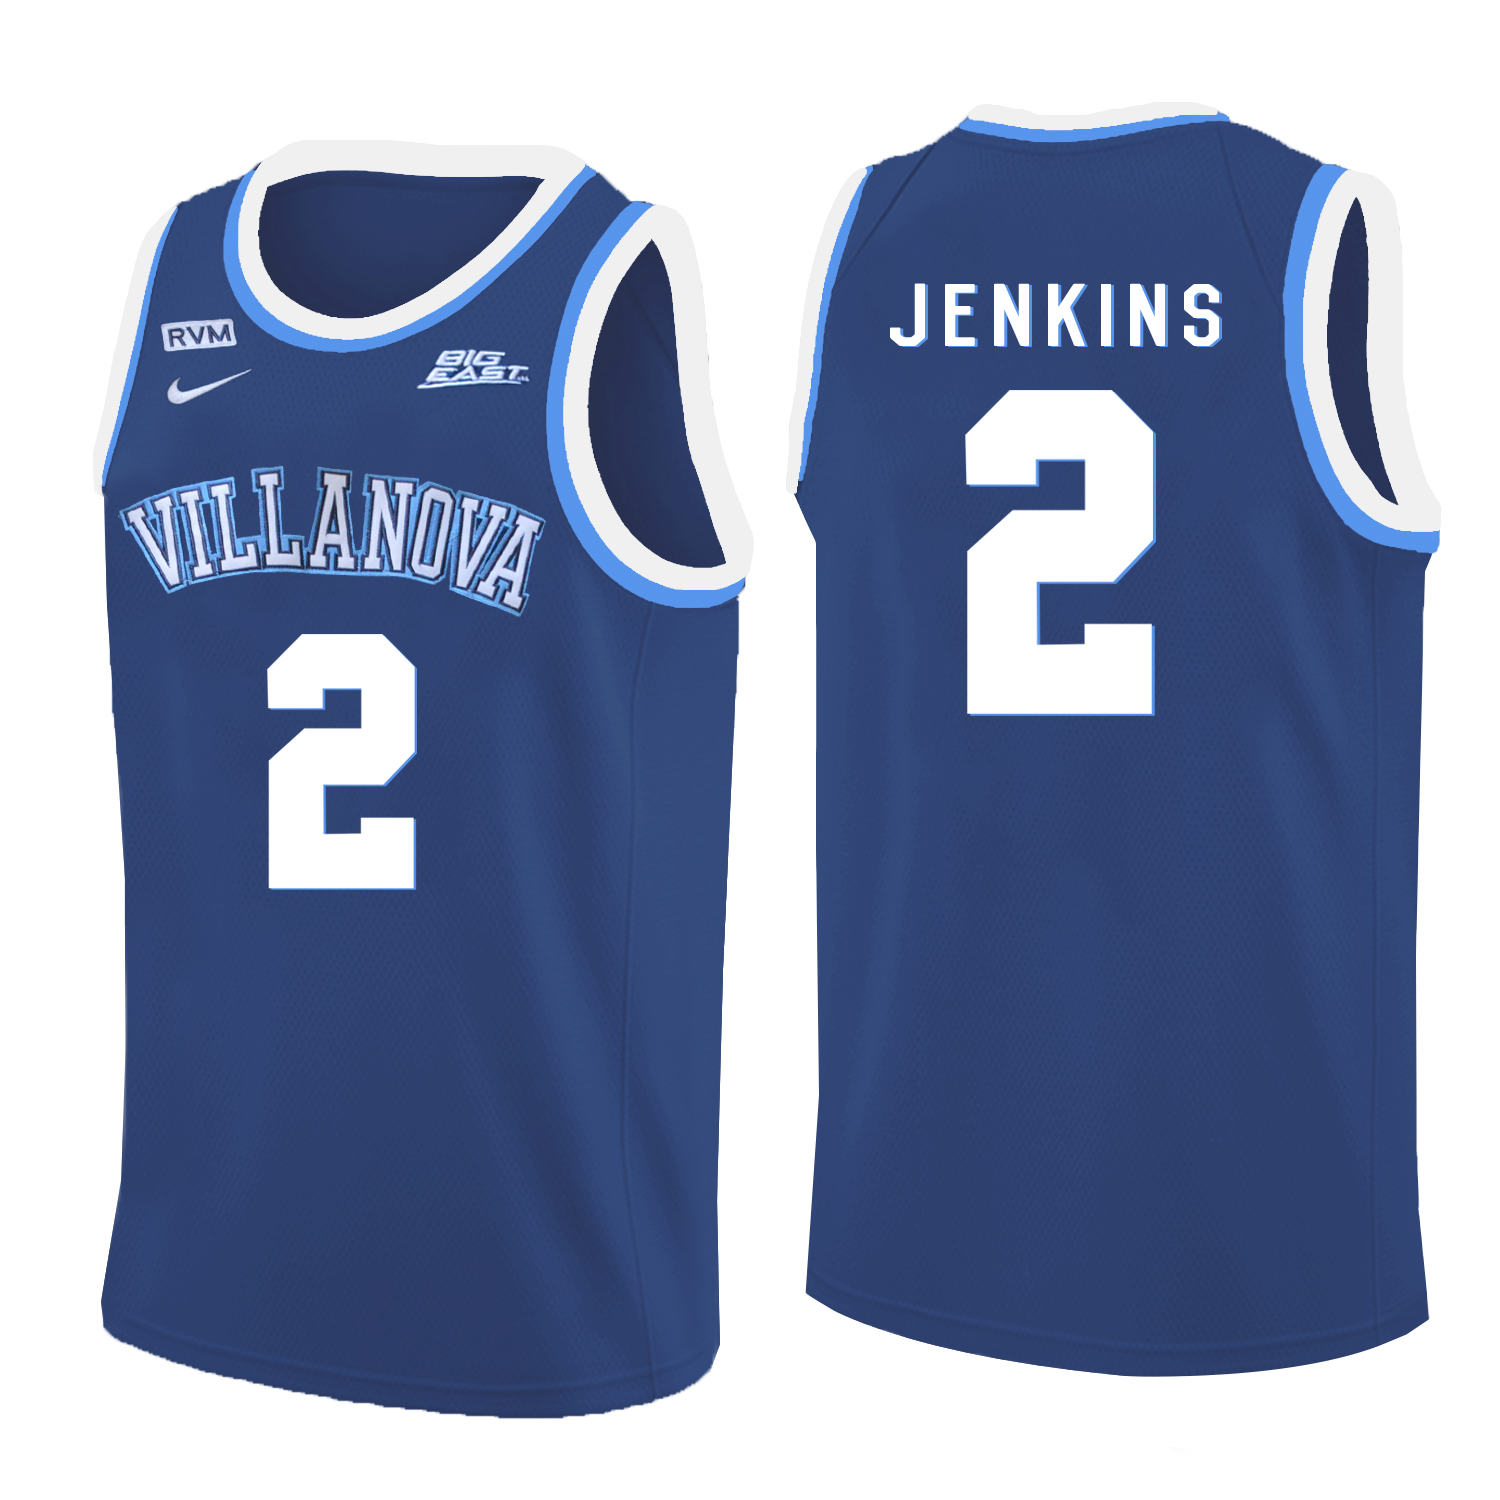 Villanova Wildcats 2 Kris Jenkins Blue College Basketball Jersey - Click Image to Close